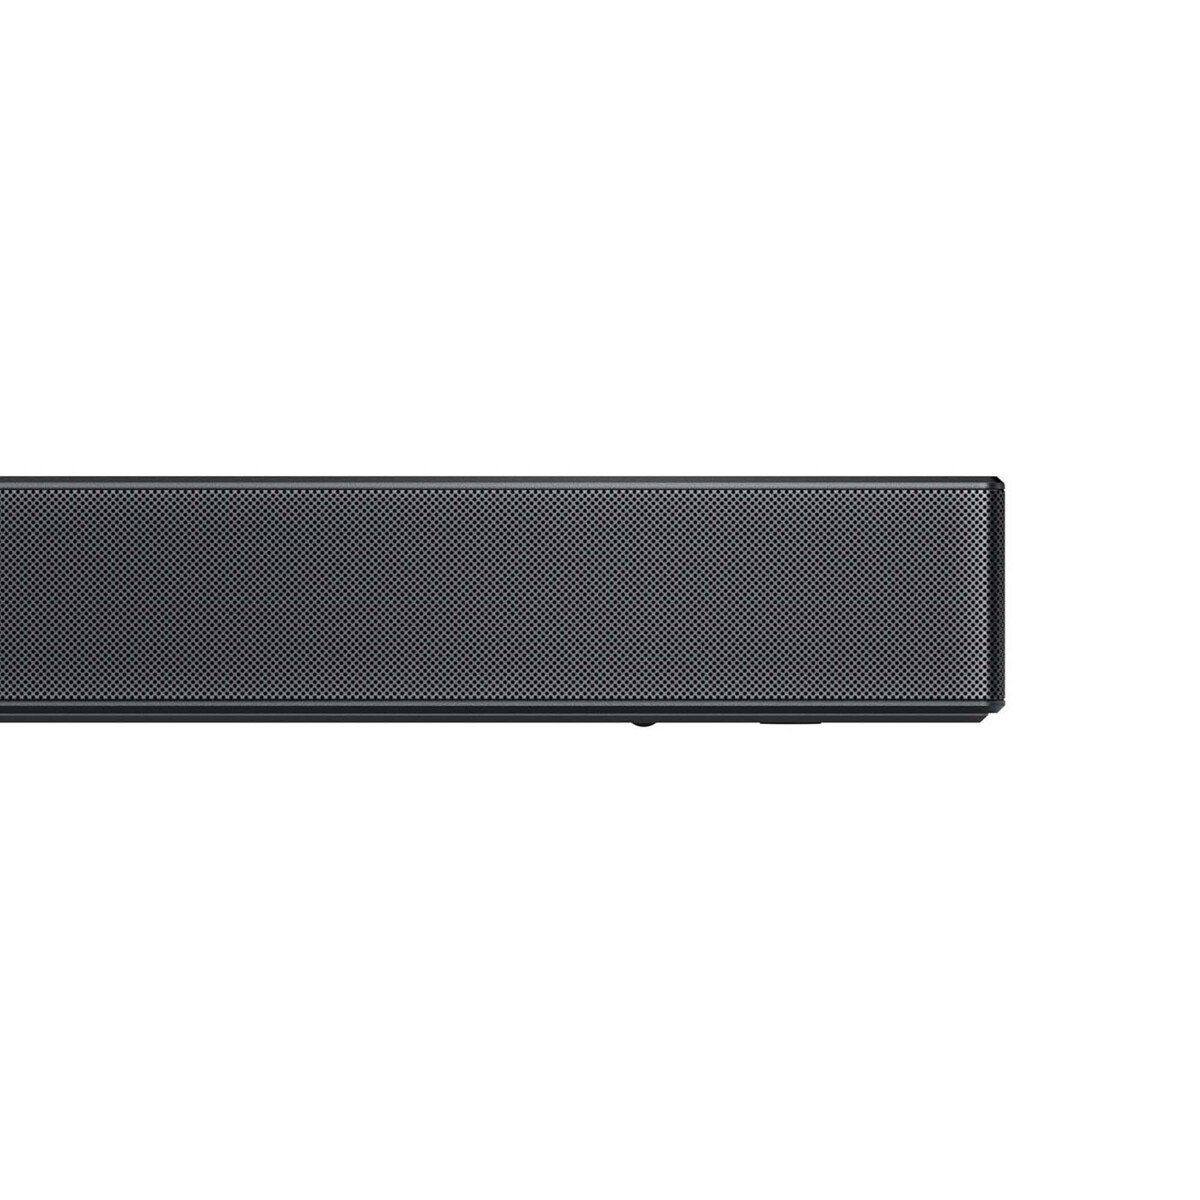 LG 3.1.2 ch Sound Bar with Dolby Atmos, 380 W, Black, S75Q